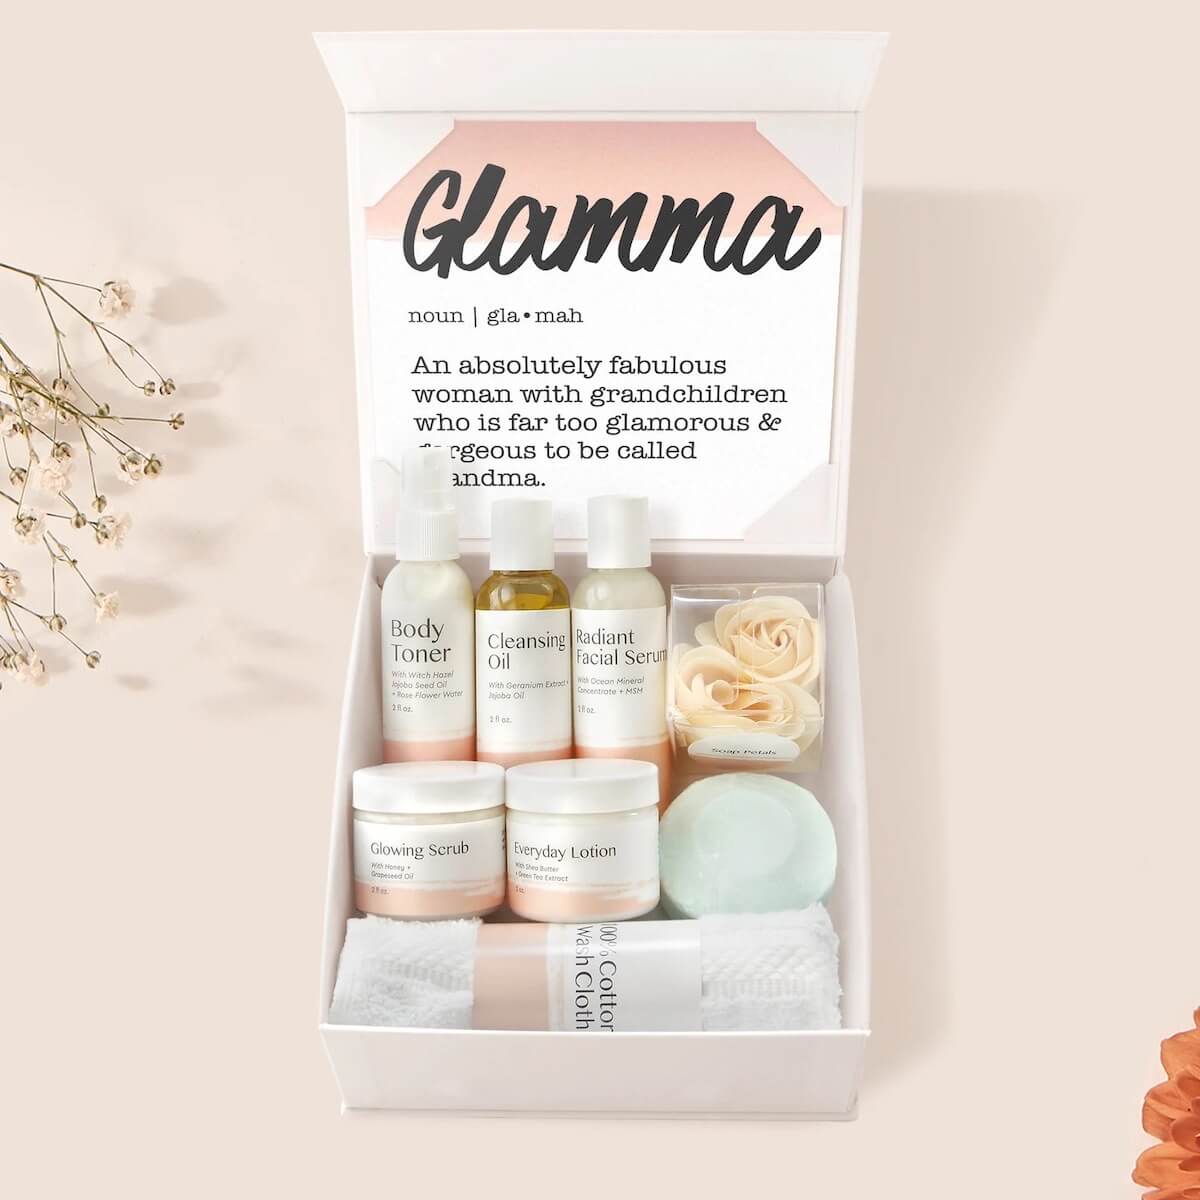 Glamma pamper box for grandmothers